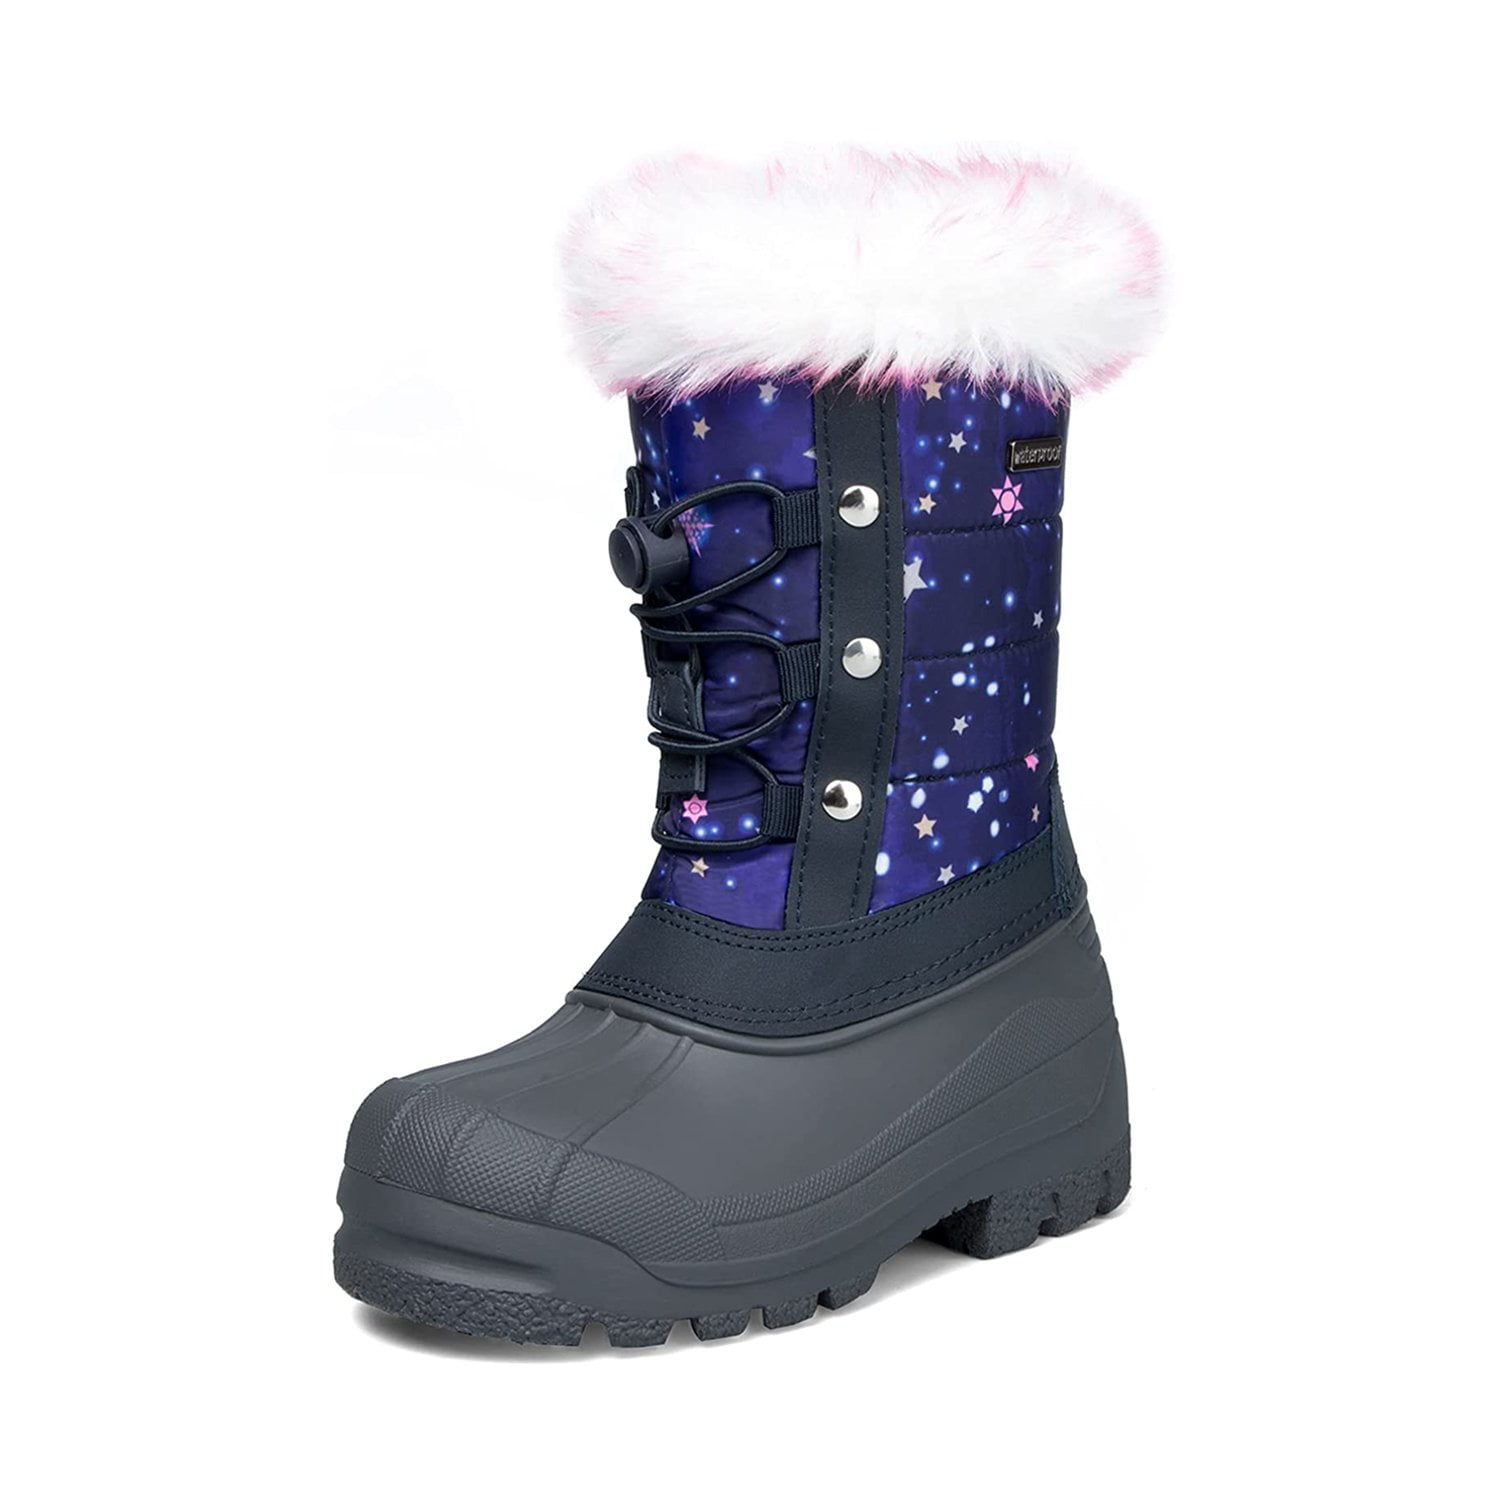 Toddler/Little Kid/Big Kid K KomForme Snow Boots for Boys & Girls Warm Waterproof Slip Resistant Winter Shoes 